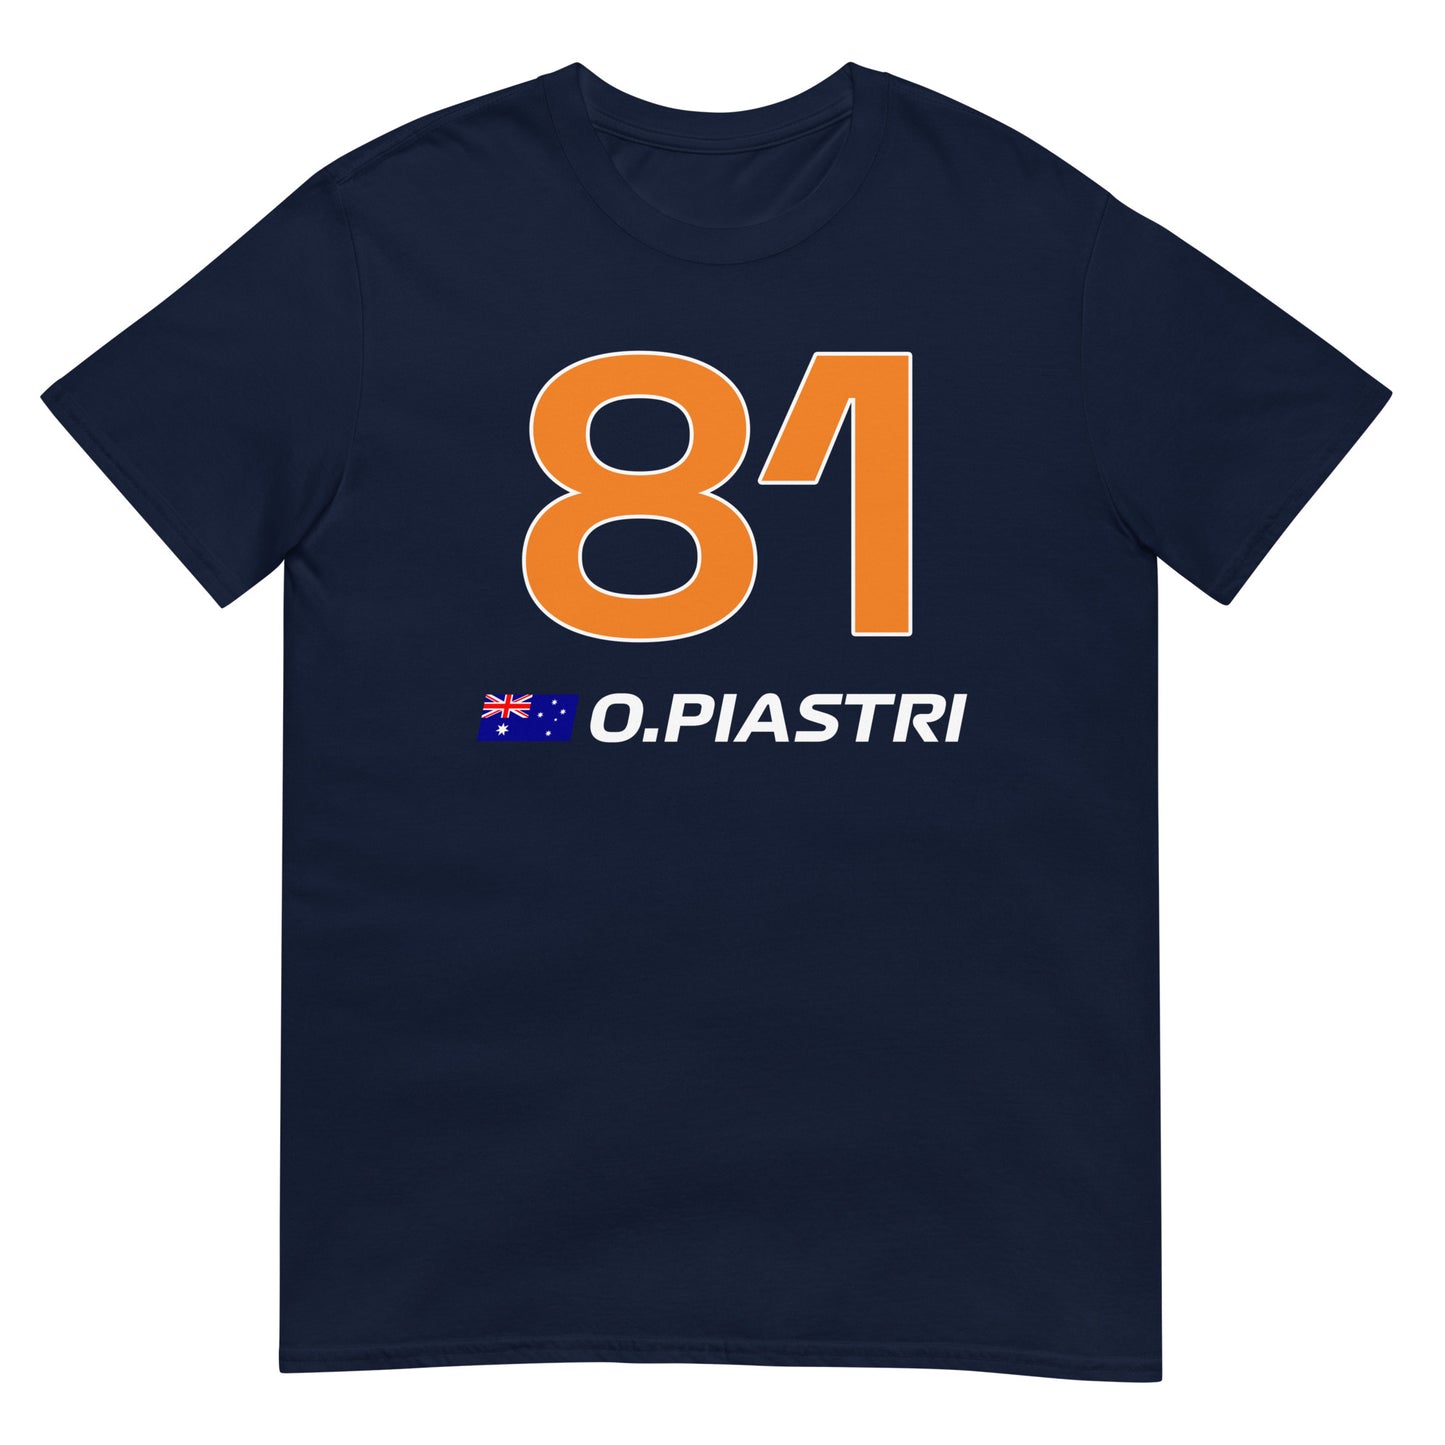 Oscar Piastri Unisex T-Shirt